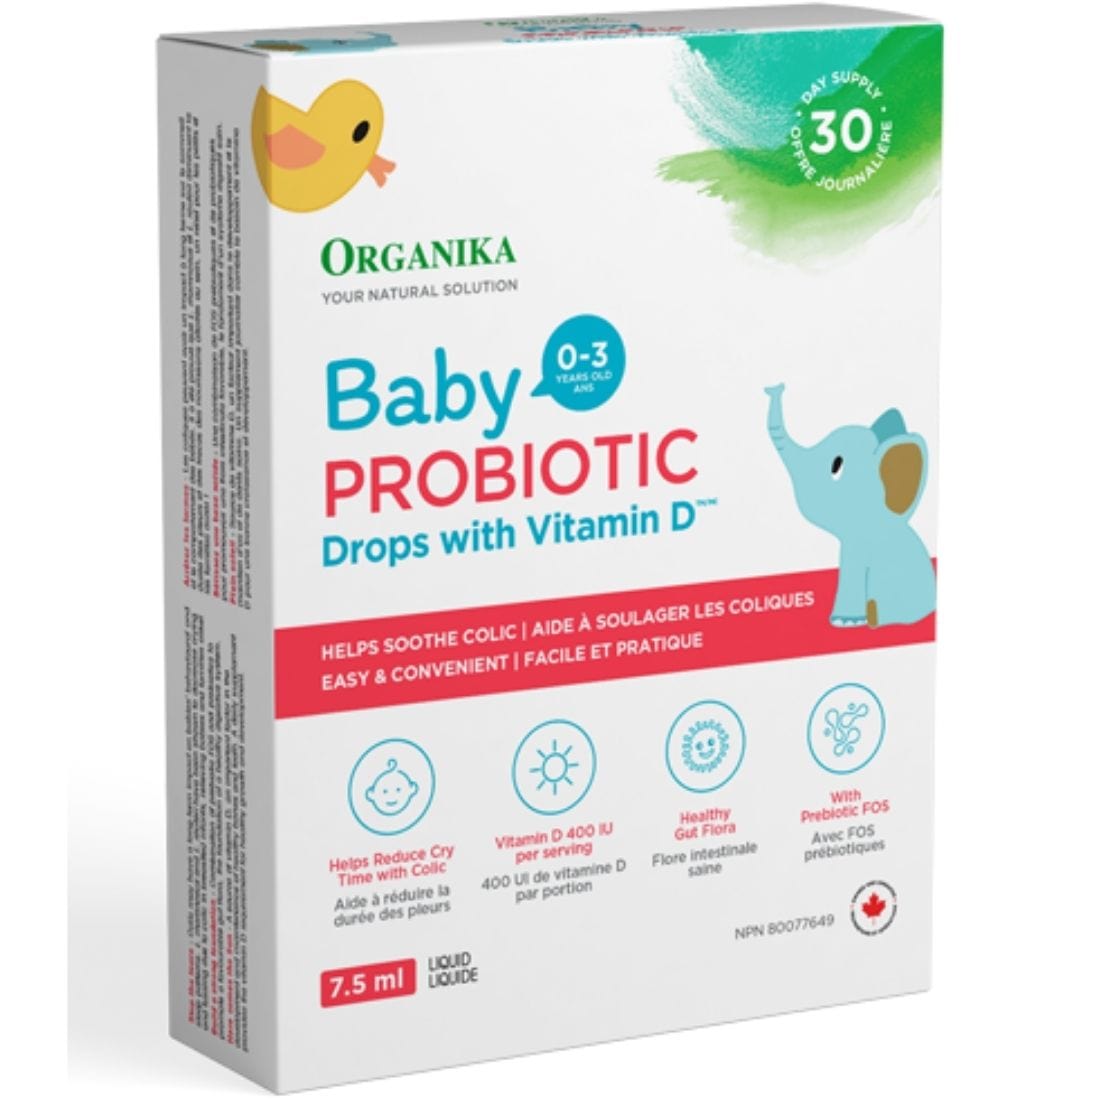 Organika Baby Liquid Probiotic with Vitamin D Drops, 7.5ml (0-3 years)